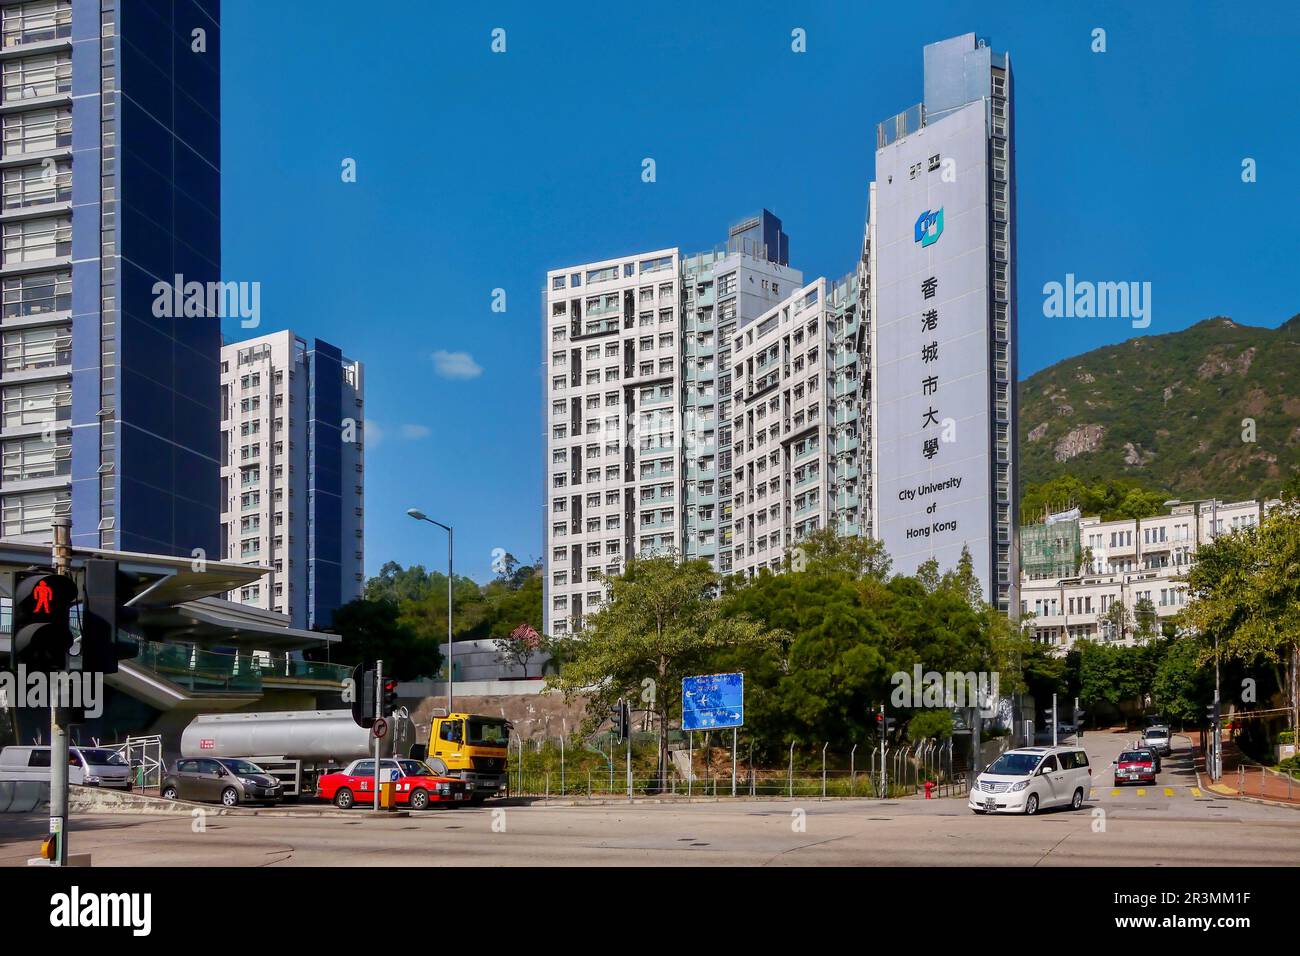 Kowloon Tong, Hongkong - 15. Dezember 2014. Eine Gruppe von Studentenwohnheimen für die City University of Hong Kong. Stockfoto